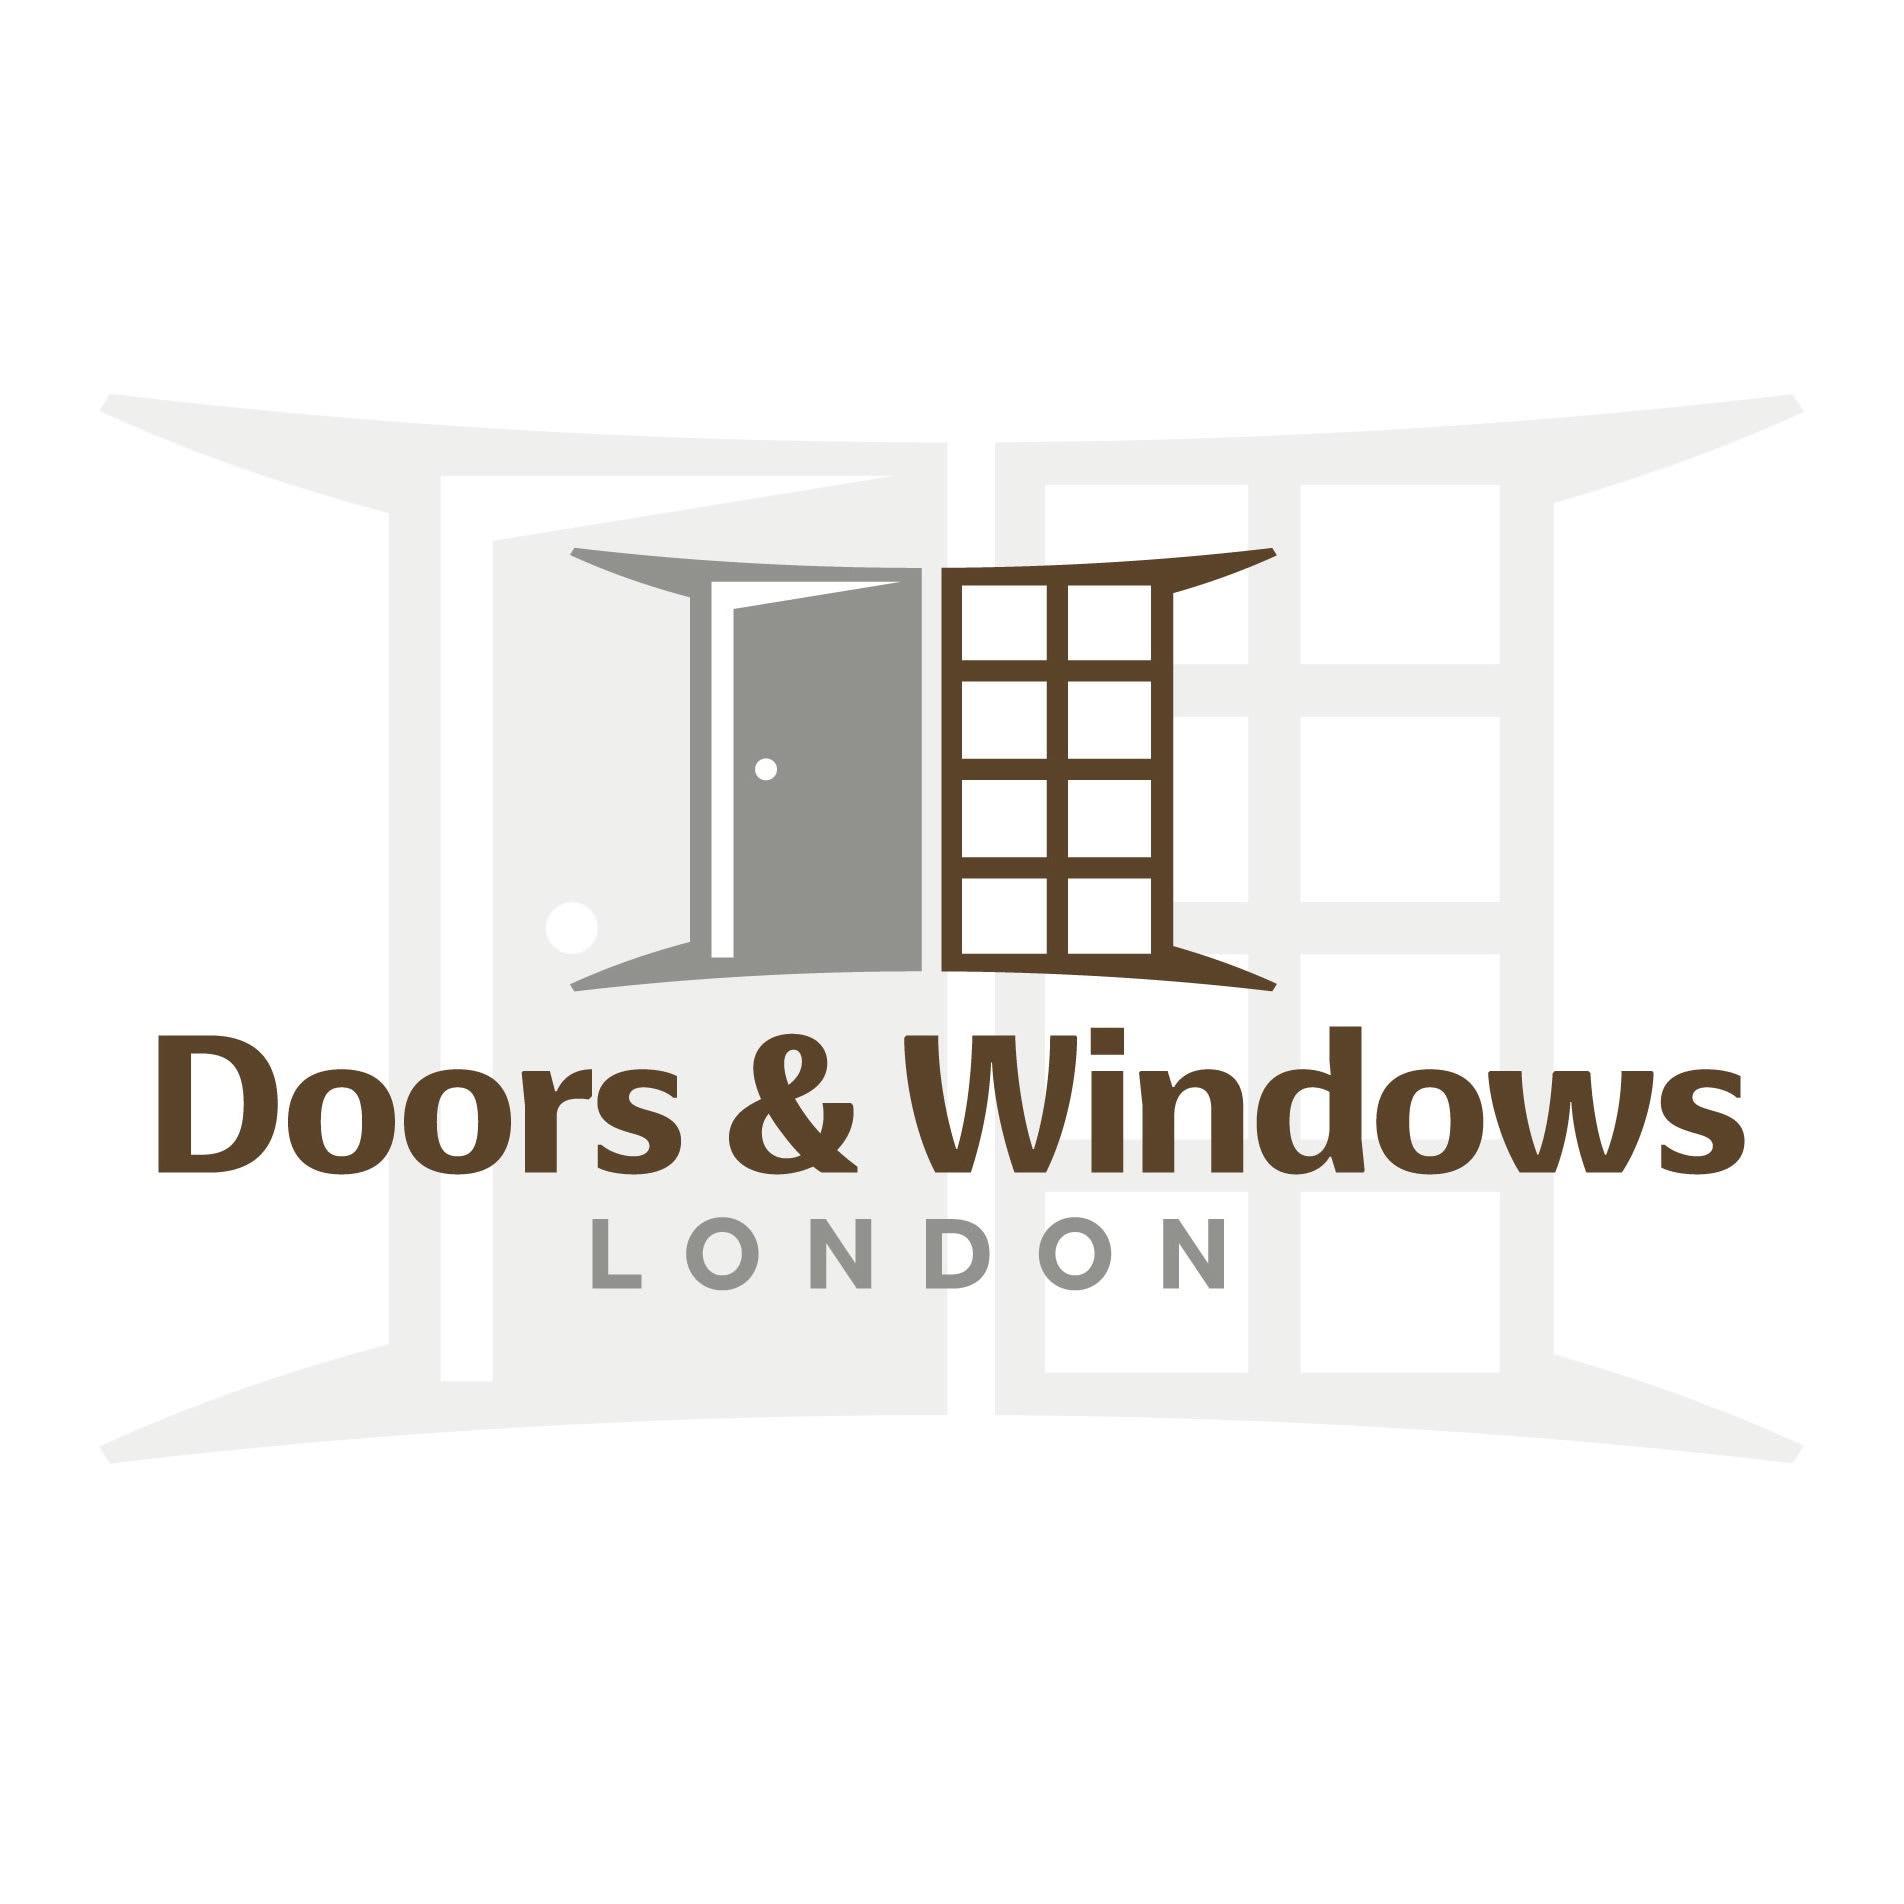 LOGO Doors Windows London Ltd London 020 4537 3998